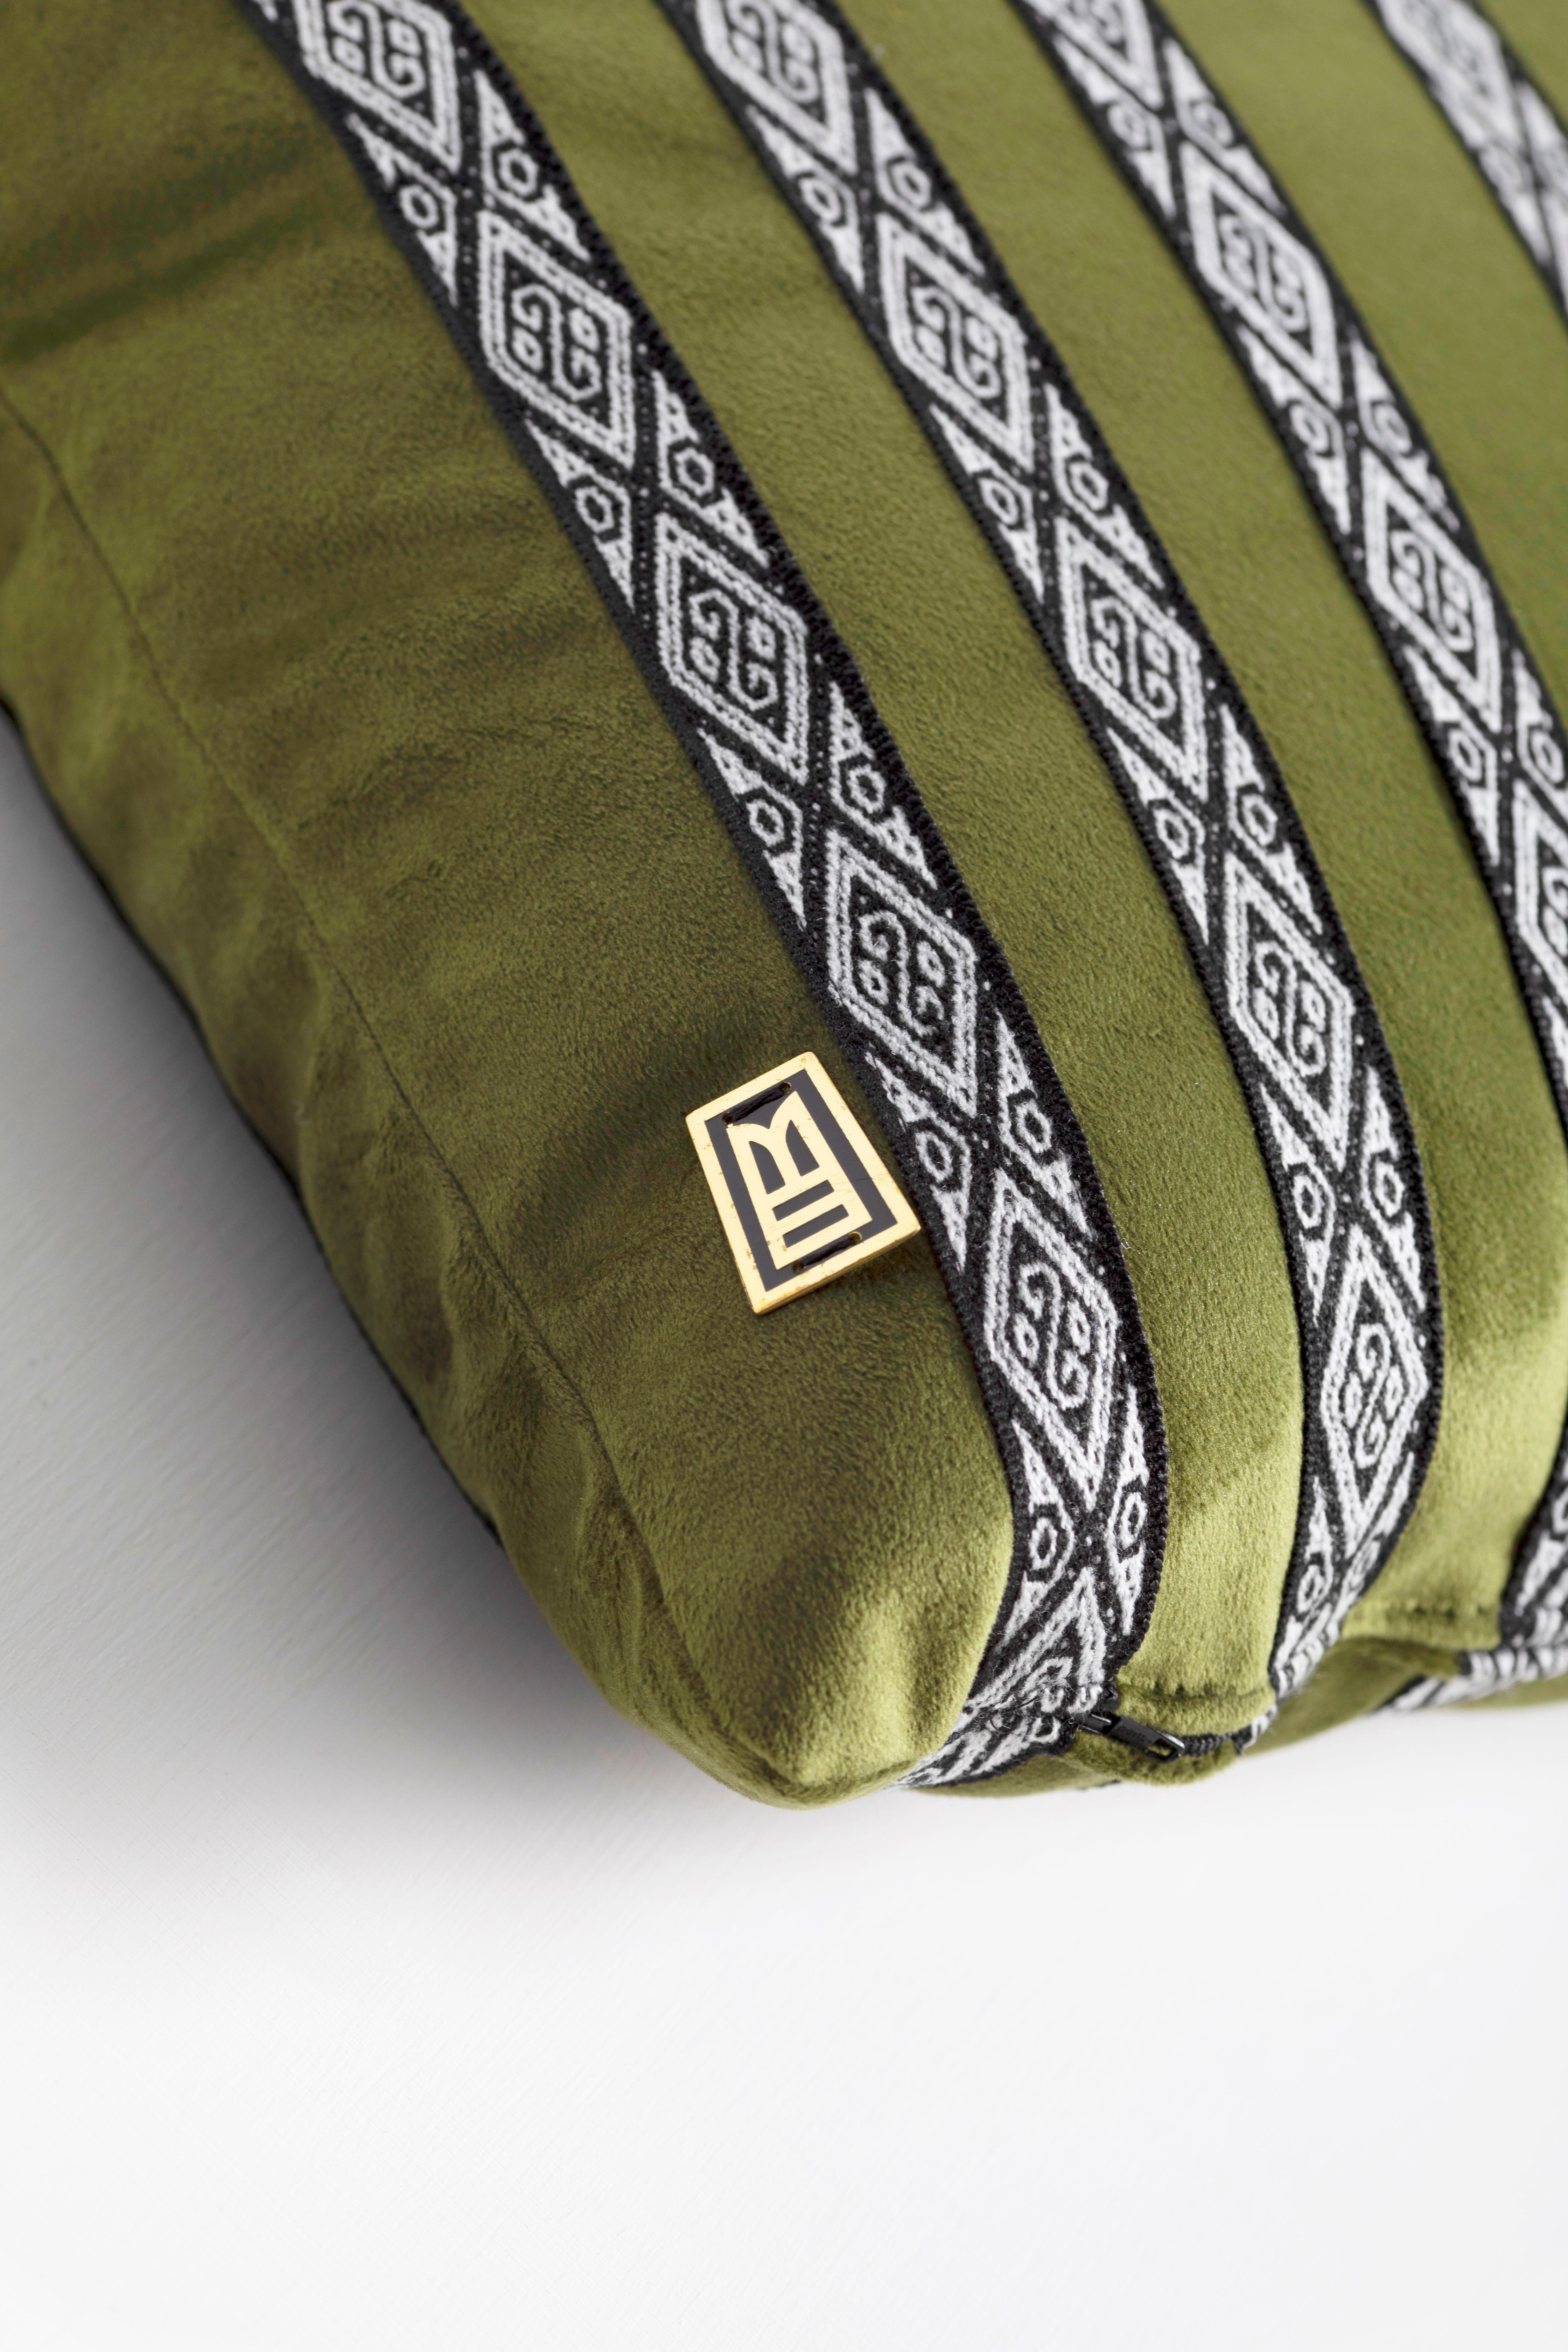 Modern FAJAS Handwoven Artisanal Sash Pillows in Olive Green Velvet by ANDEAN, Set of 2 For Sale